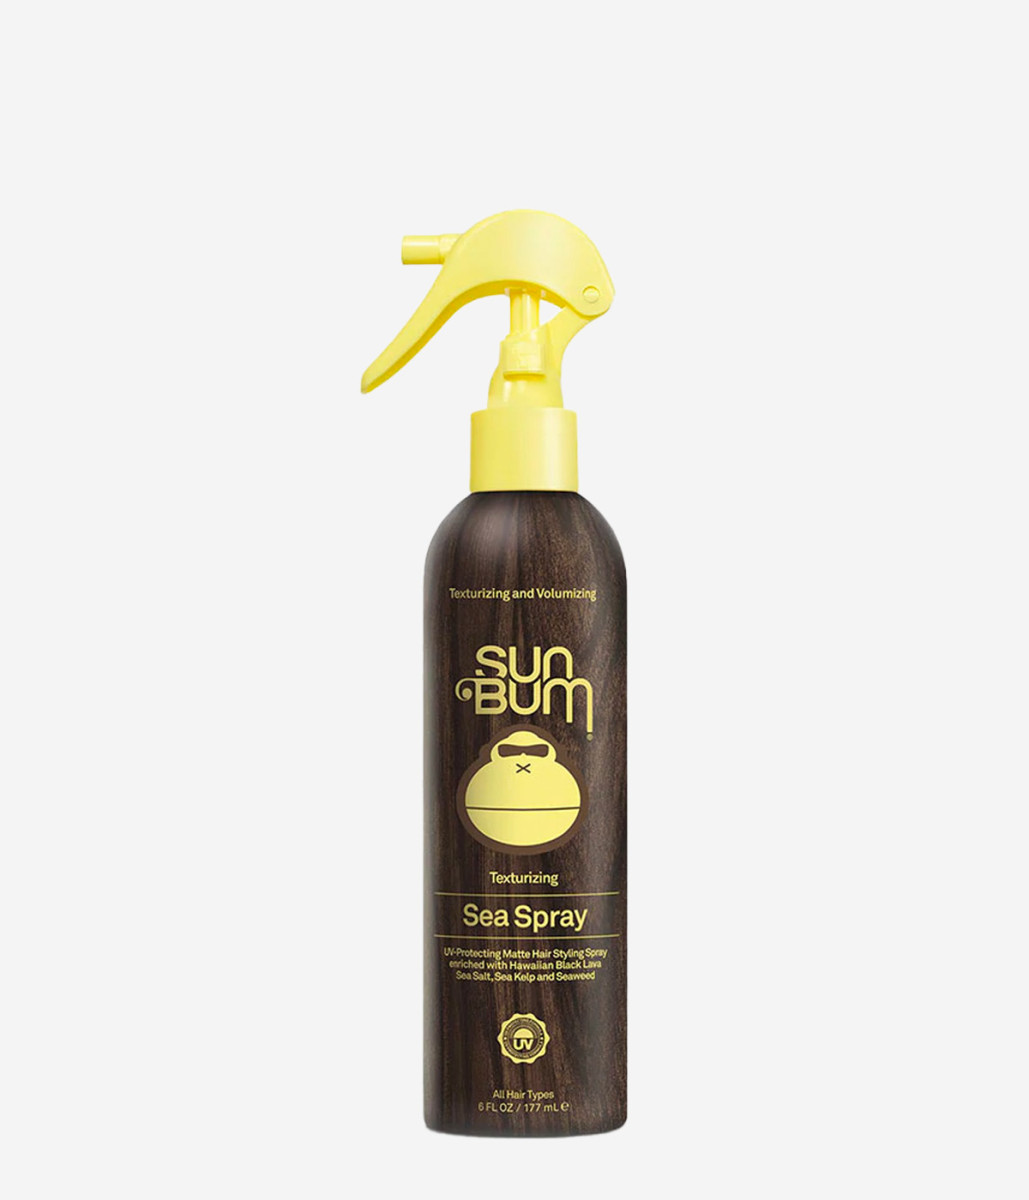 Sun Bum sea spray hair texturizing